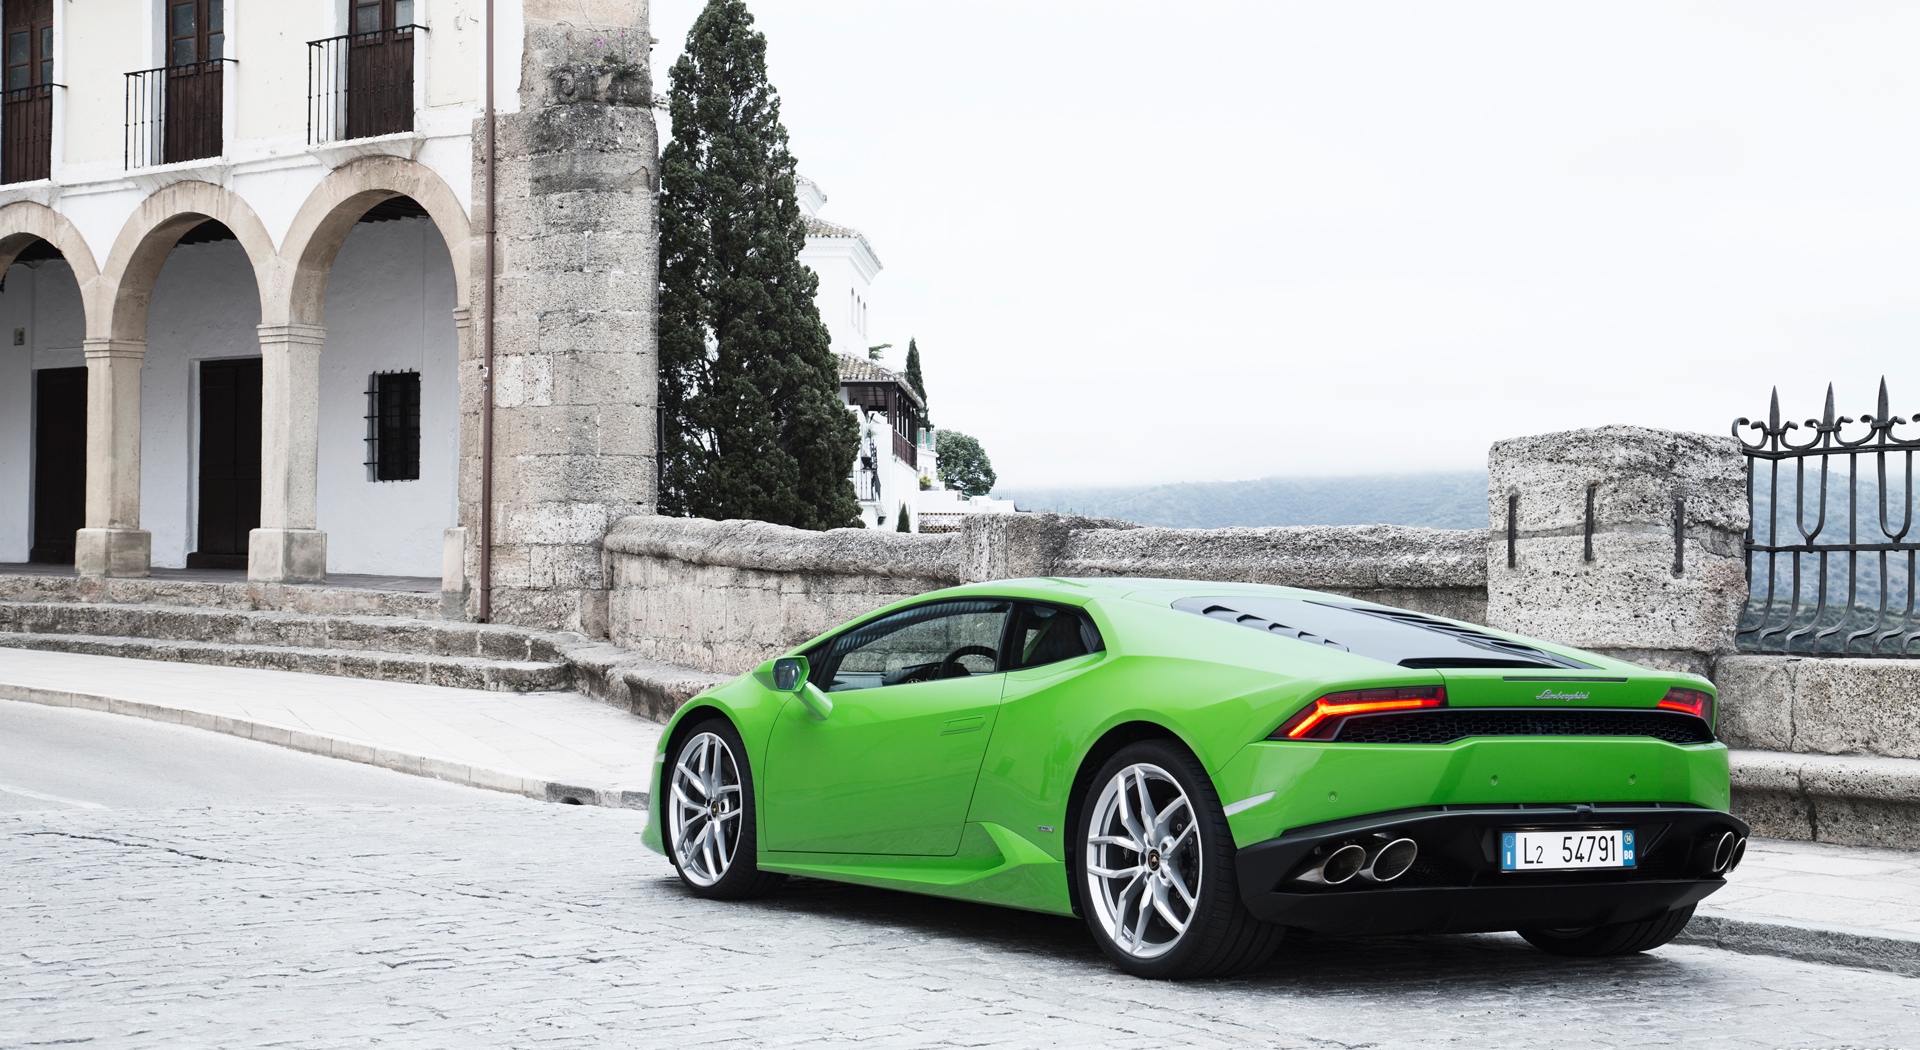 Lamborghini Huracan green